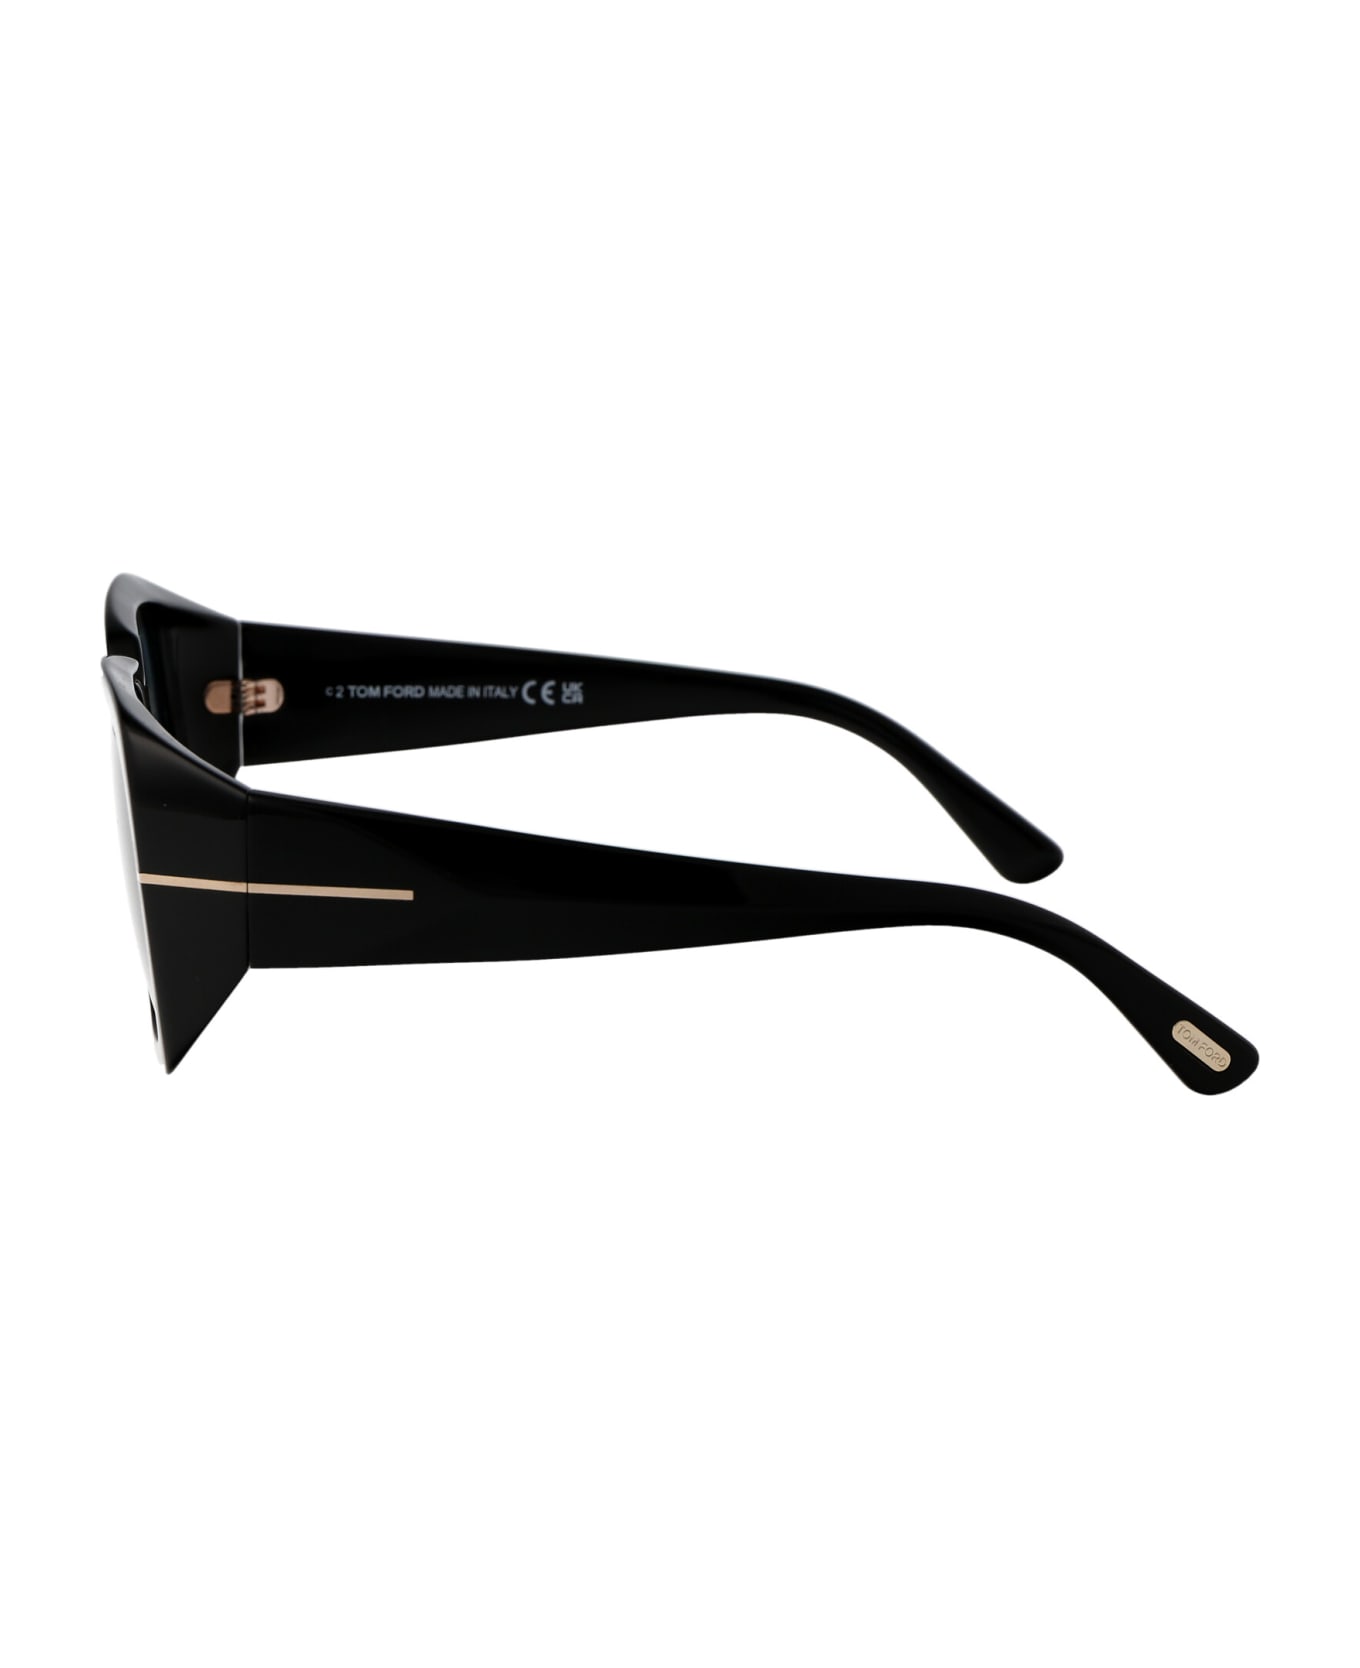 Tom Ford Eyewear Ryder-02 Sunglasses - 01V Nero Lucido / Blu